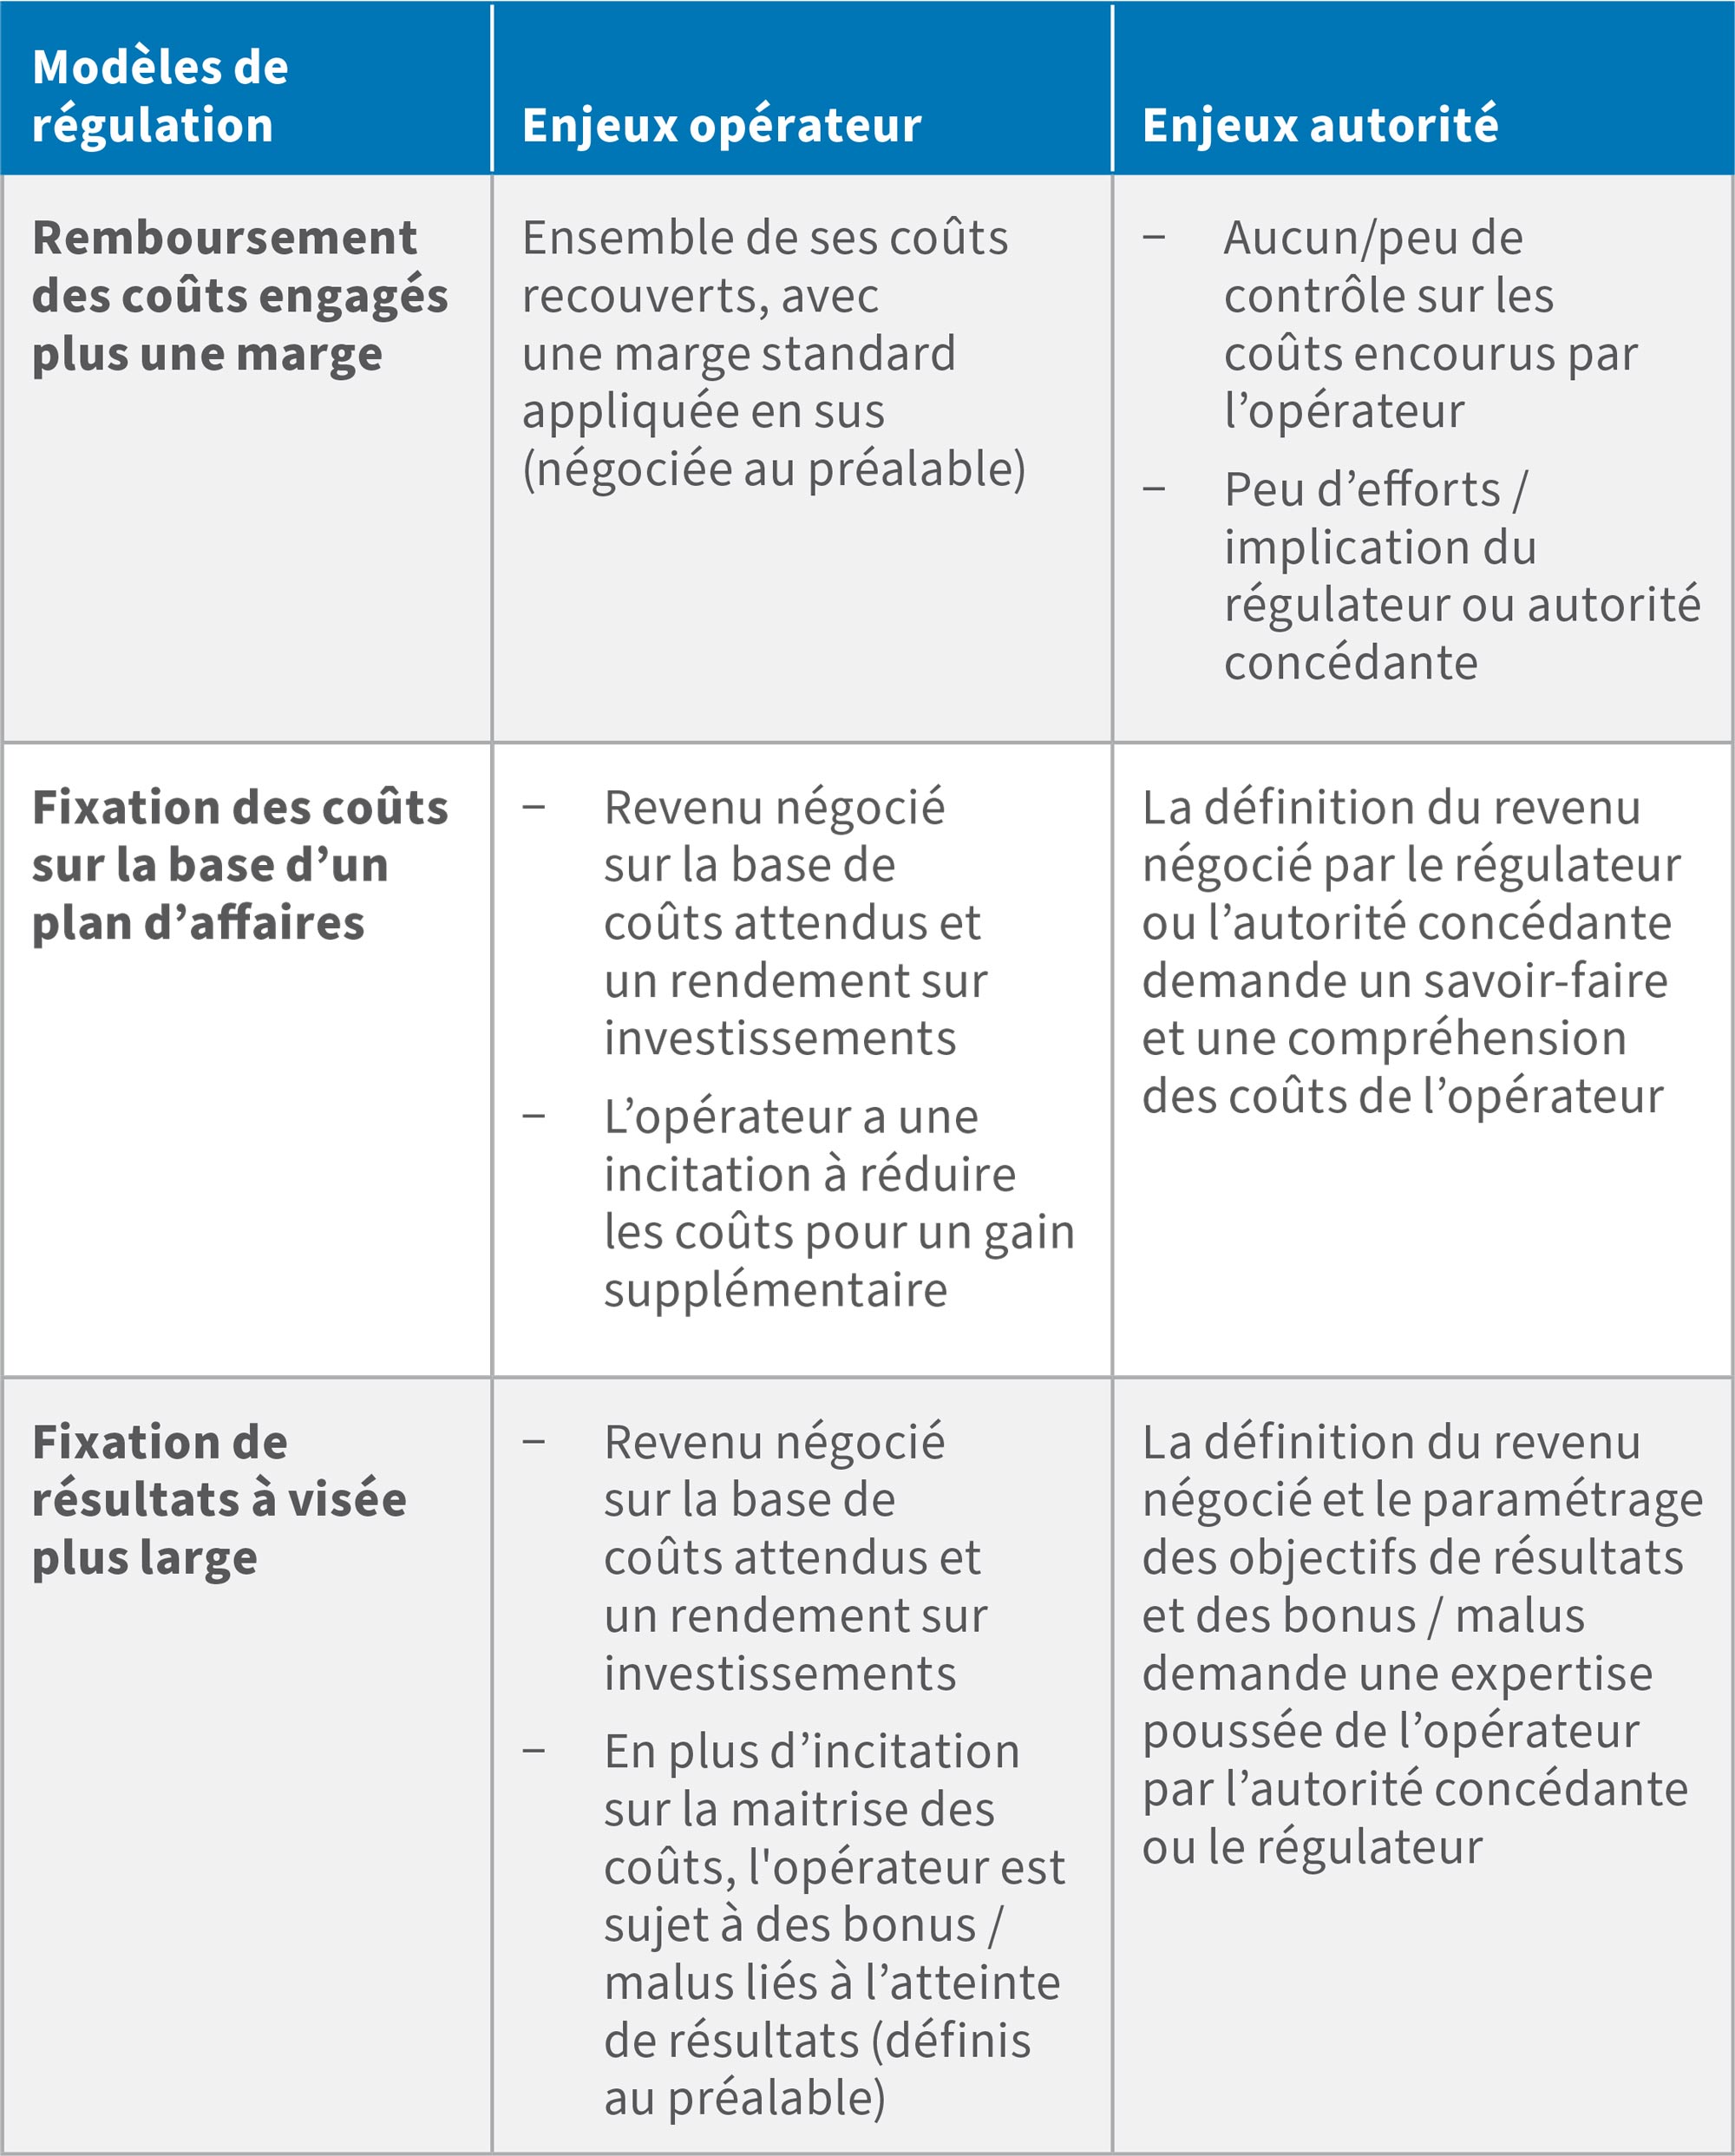 Regulation model